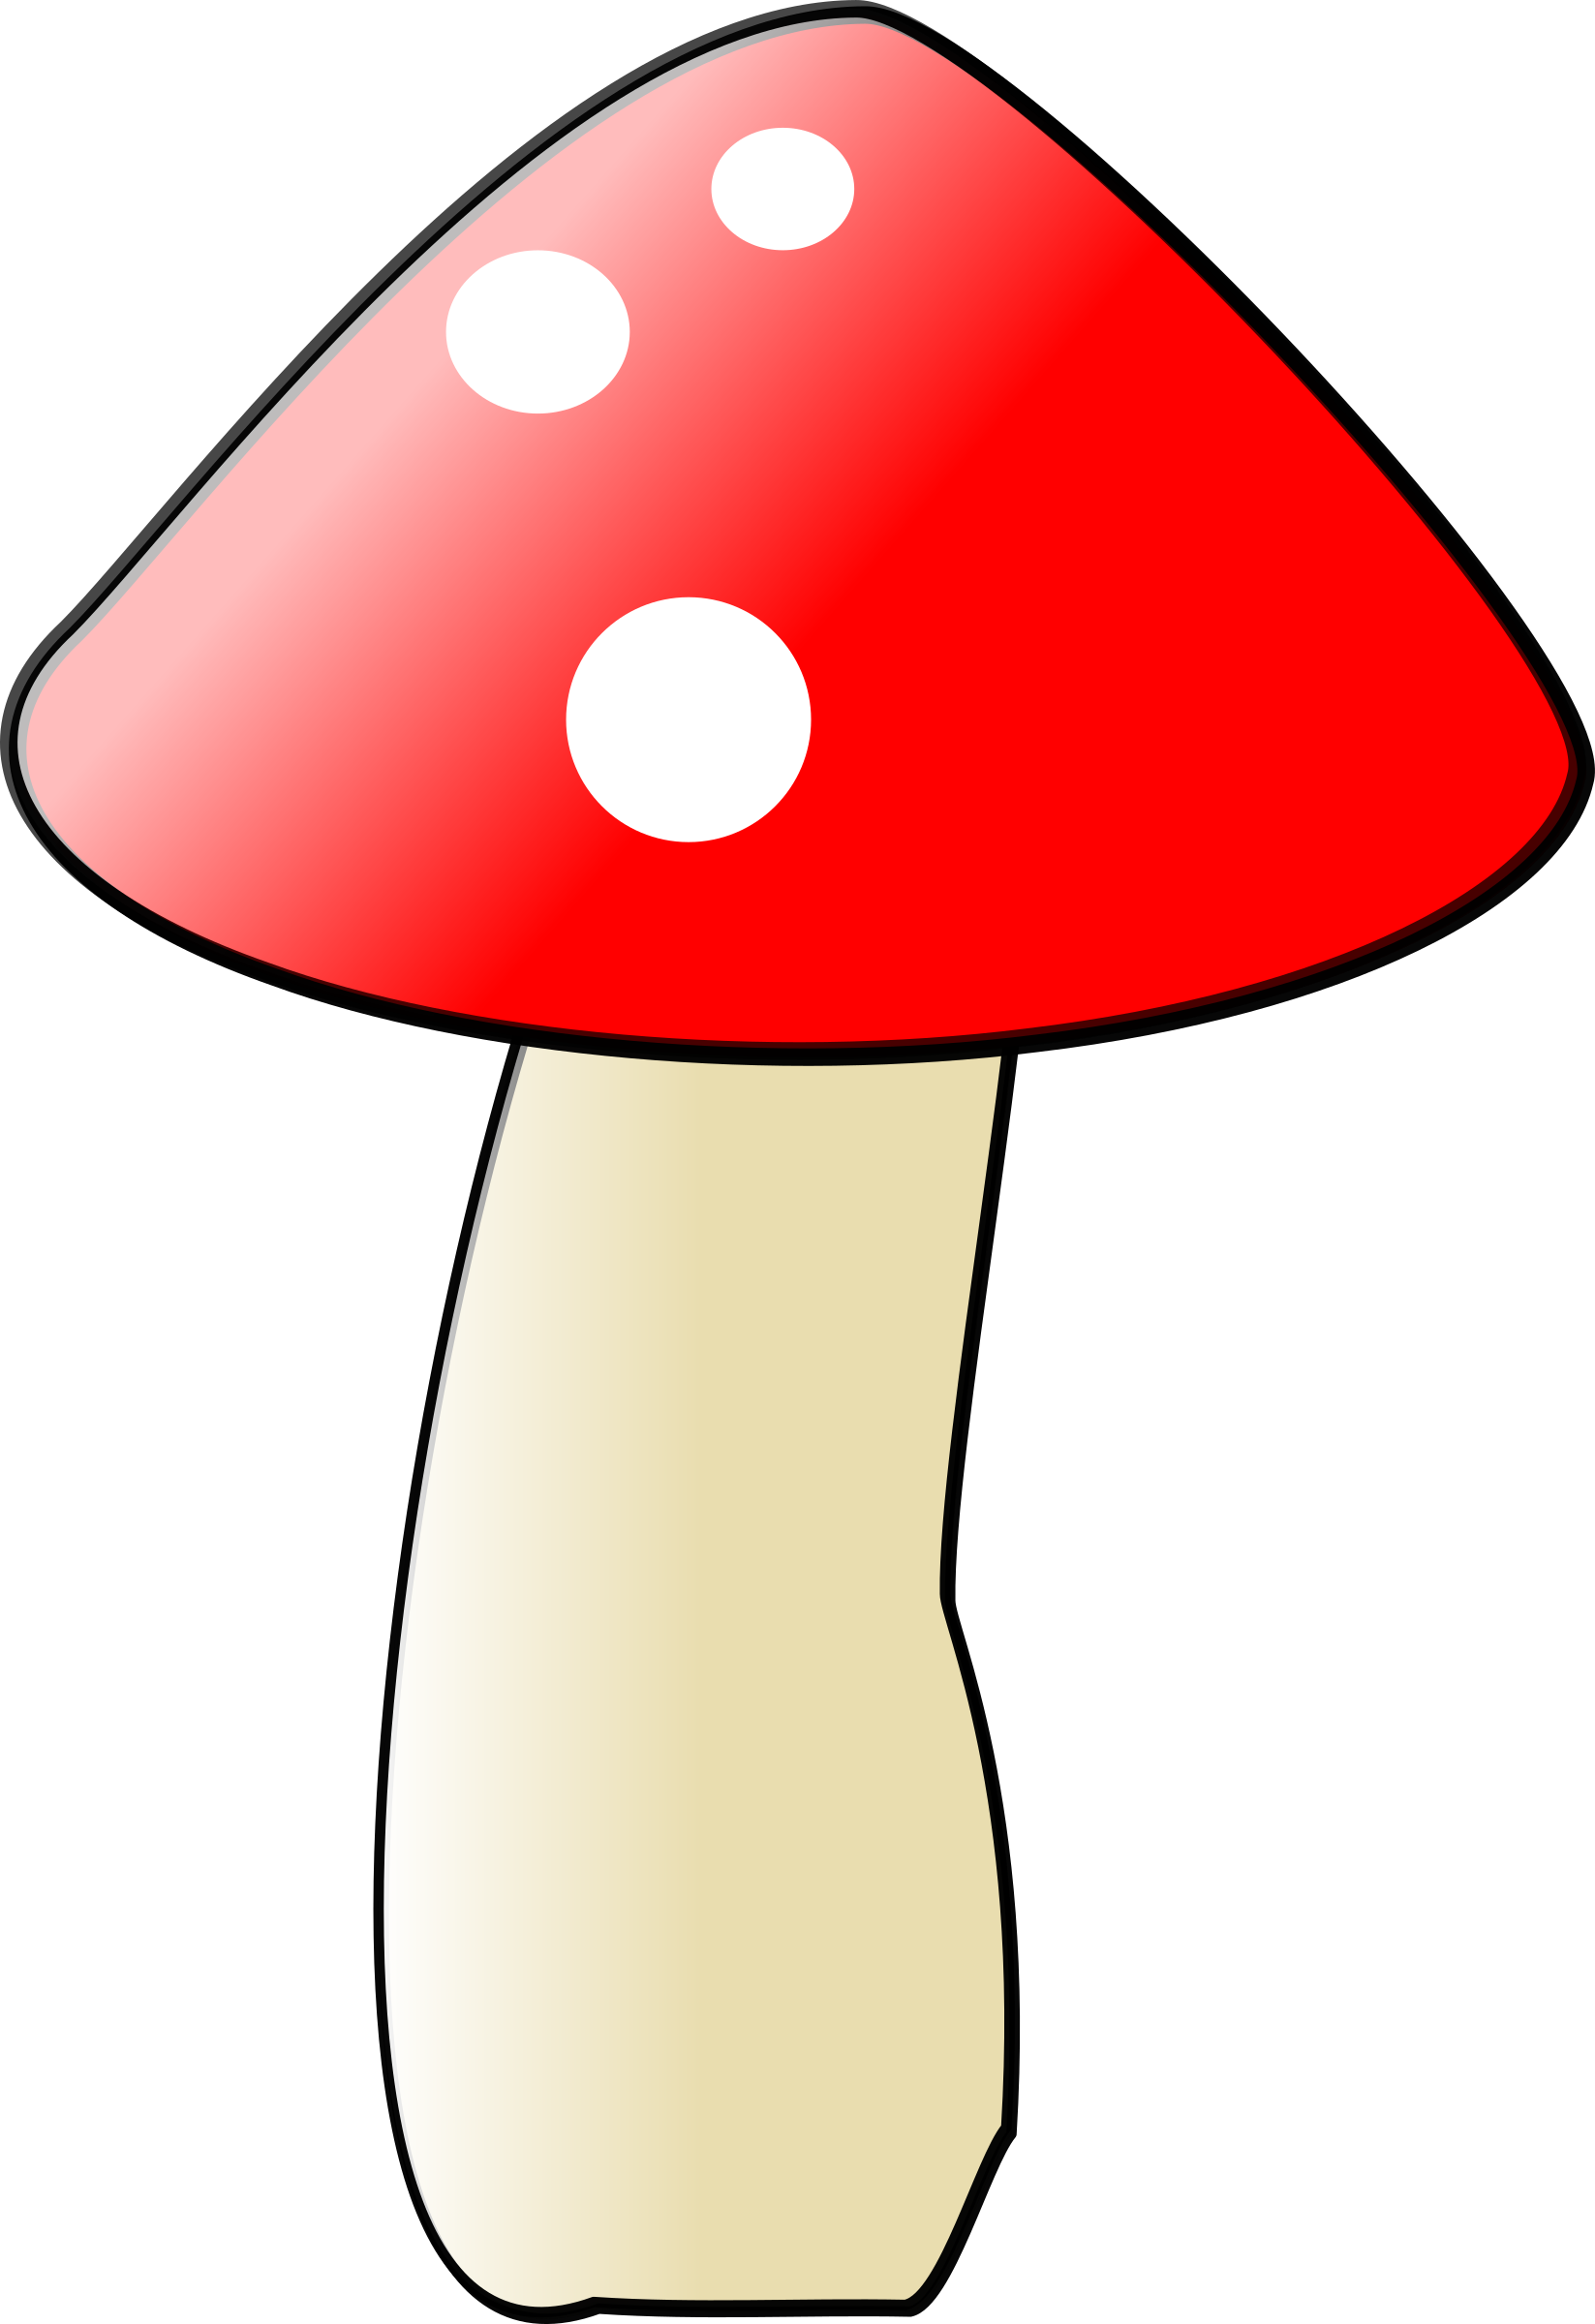 Mushroom Home Png Images - Cartoon Mushroom Transparent Background (800x800)